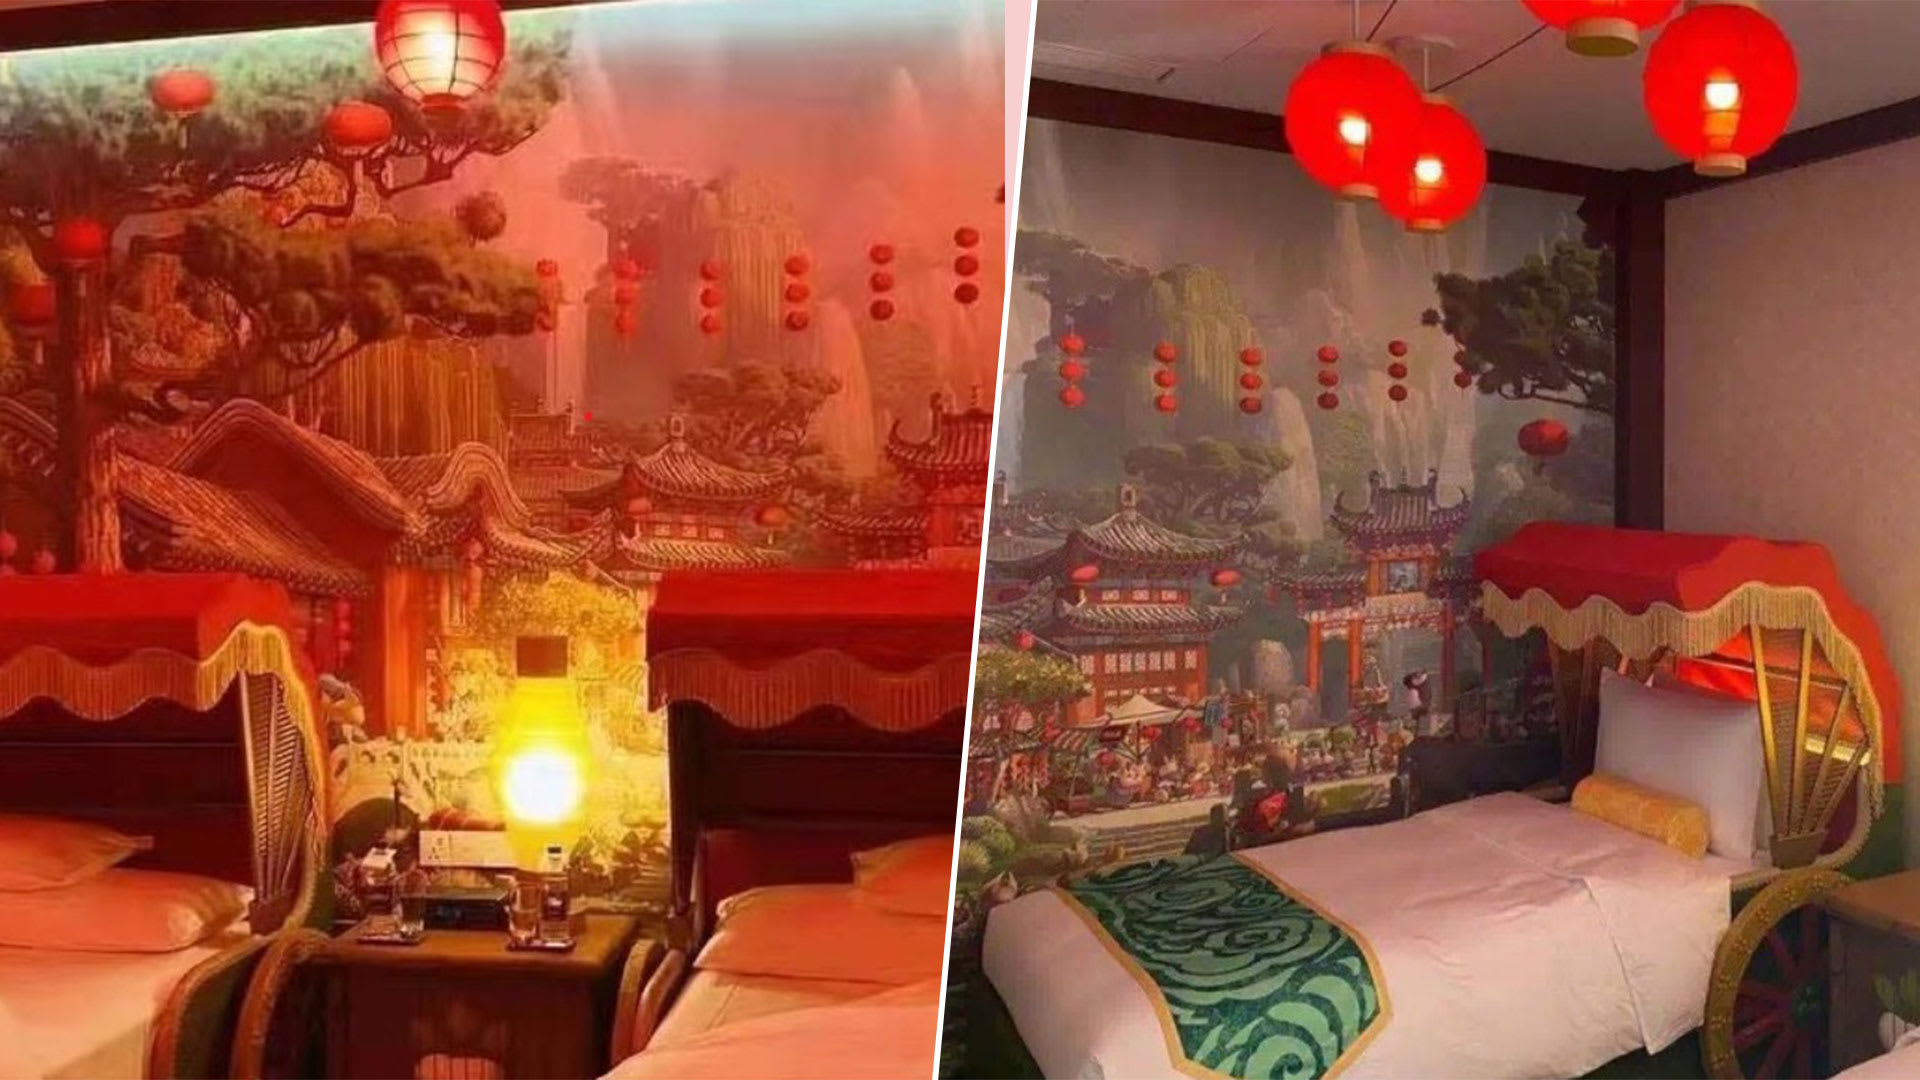 Universal Studios Beijing’s Kung Fu Panda-Themed Hotel Room Looks Like “Hell”, Say Netizens